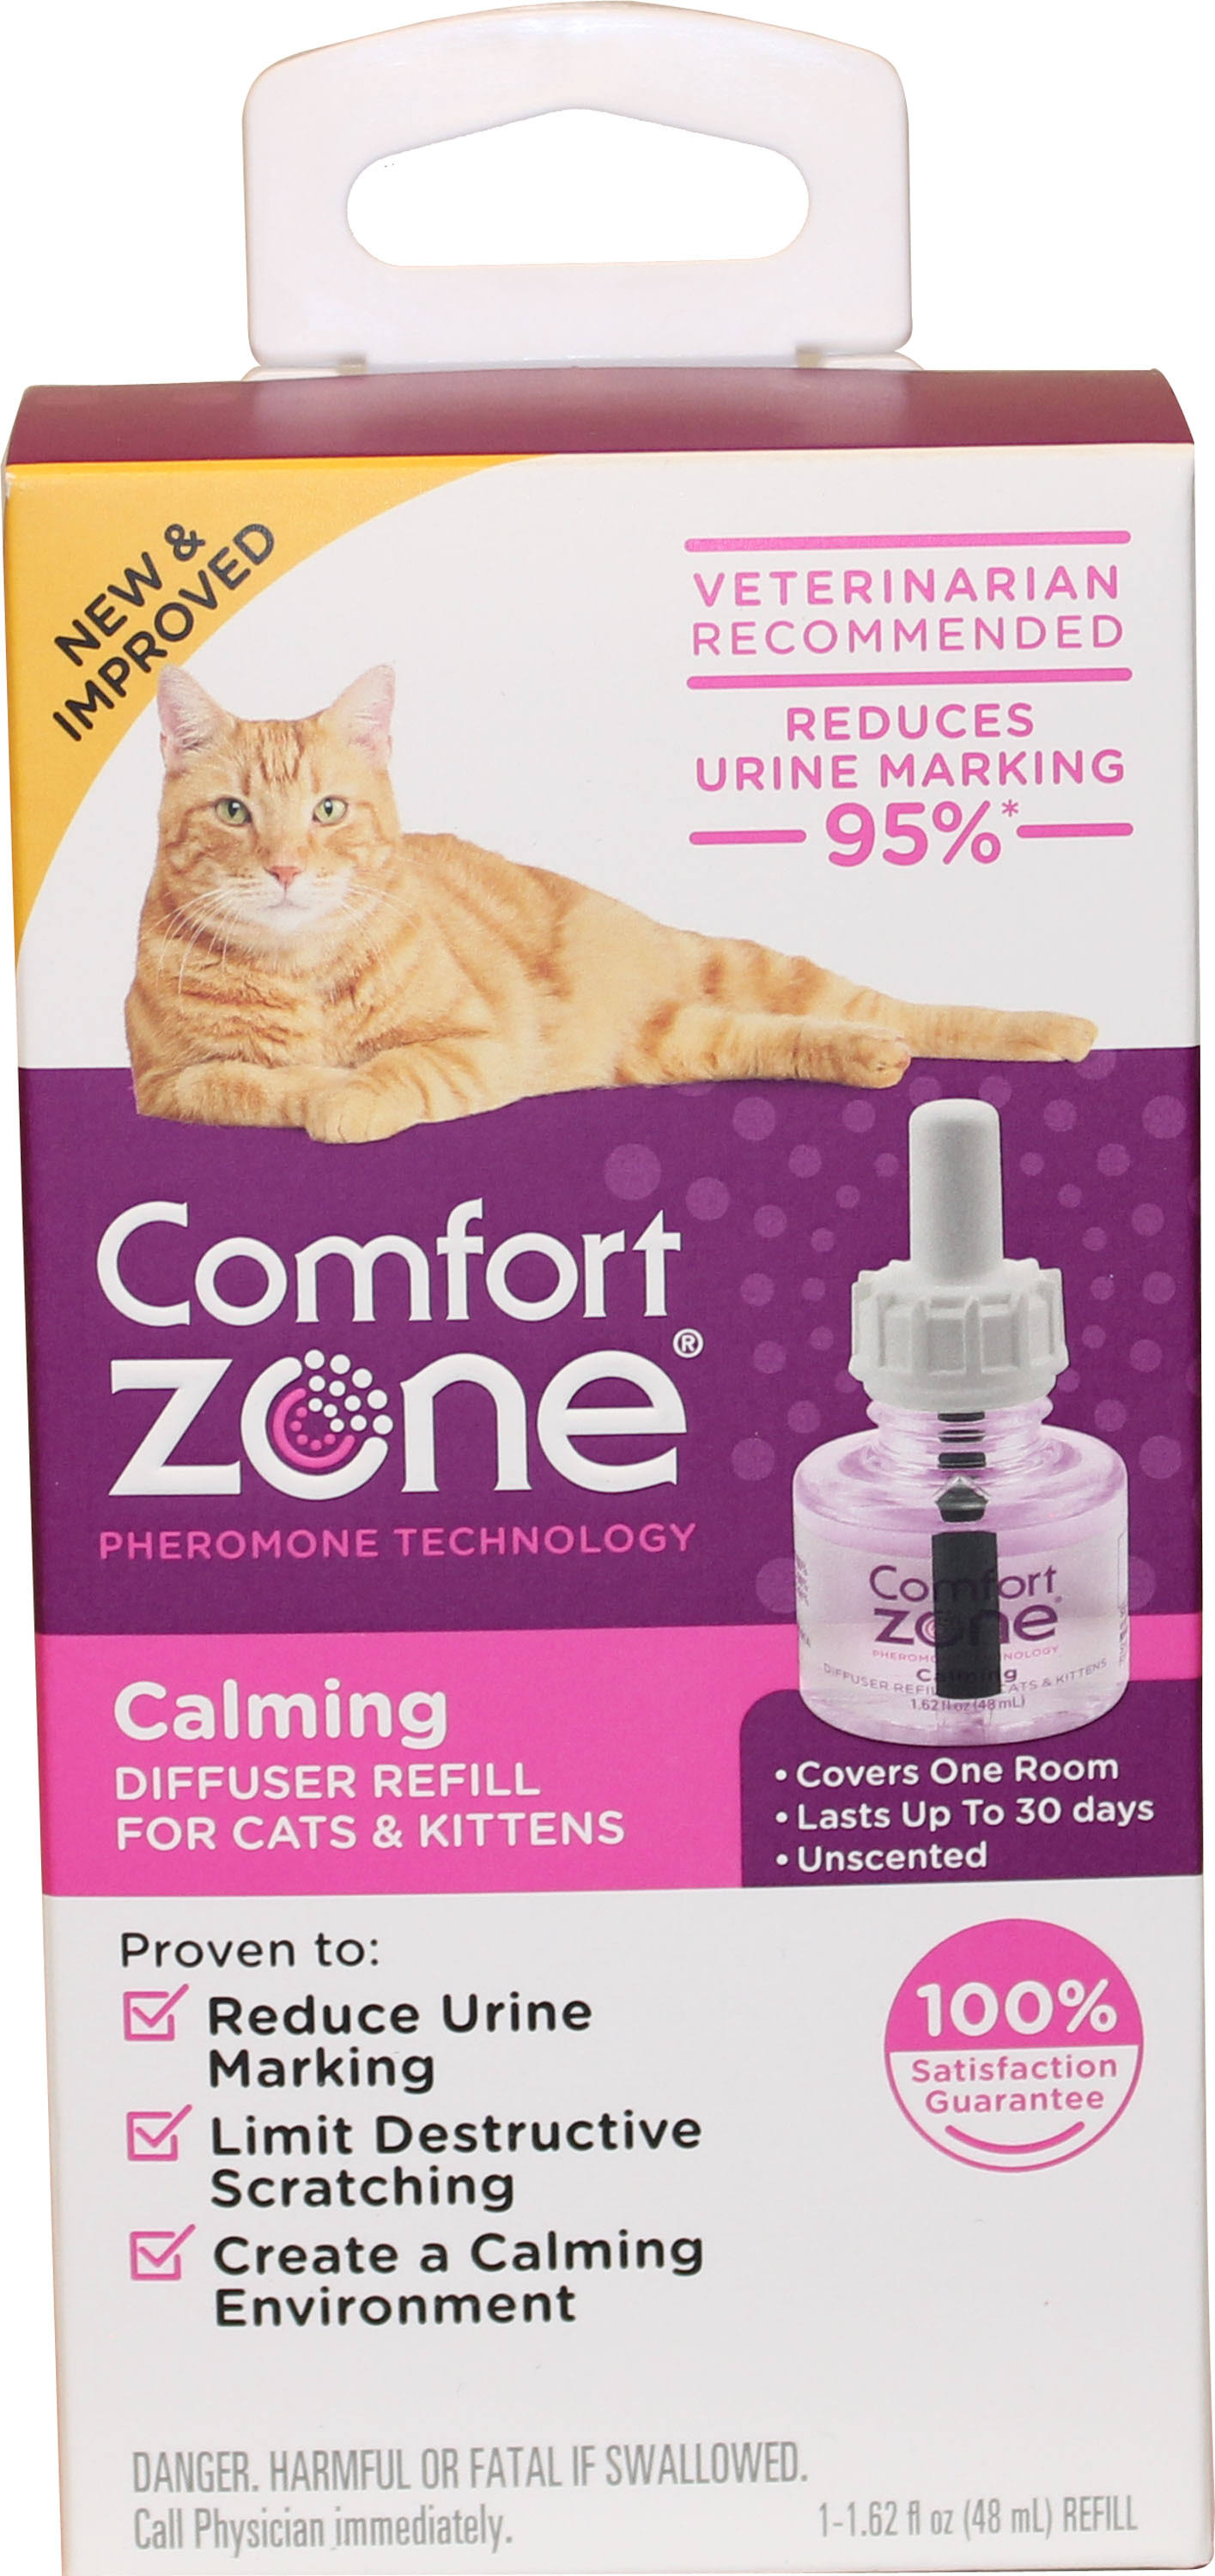 Comfort Zone Calming Diffuser Refill for Cats - 1.62 Oz